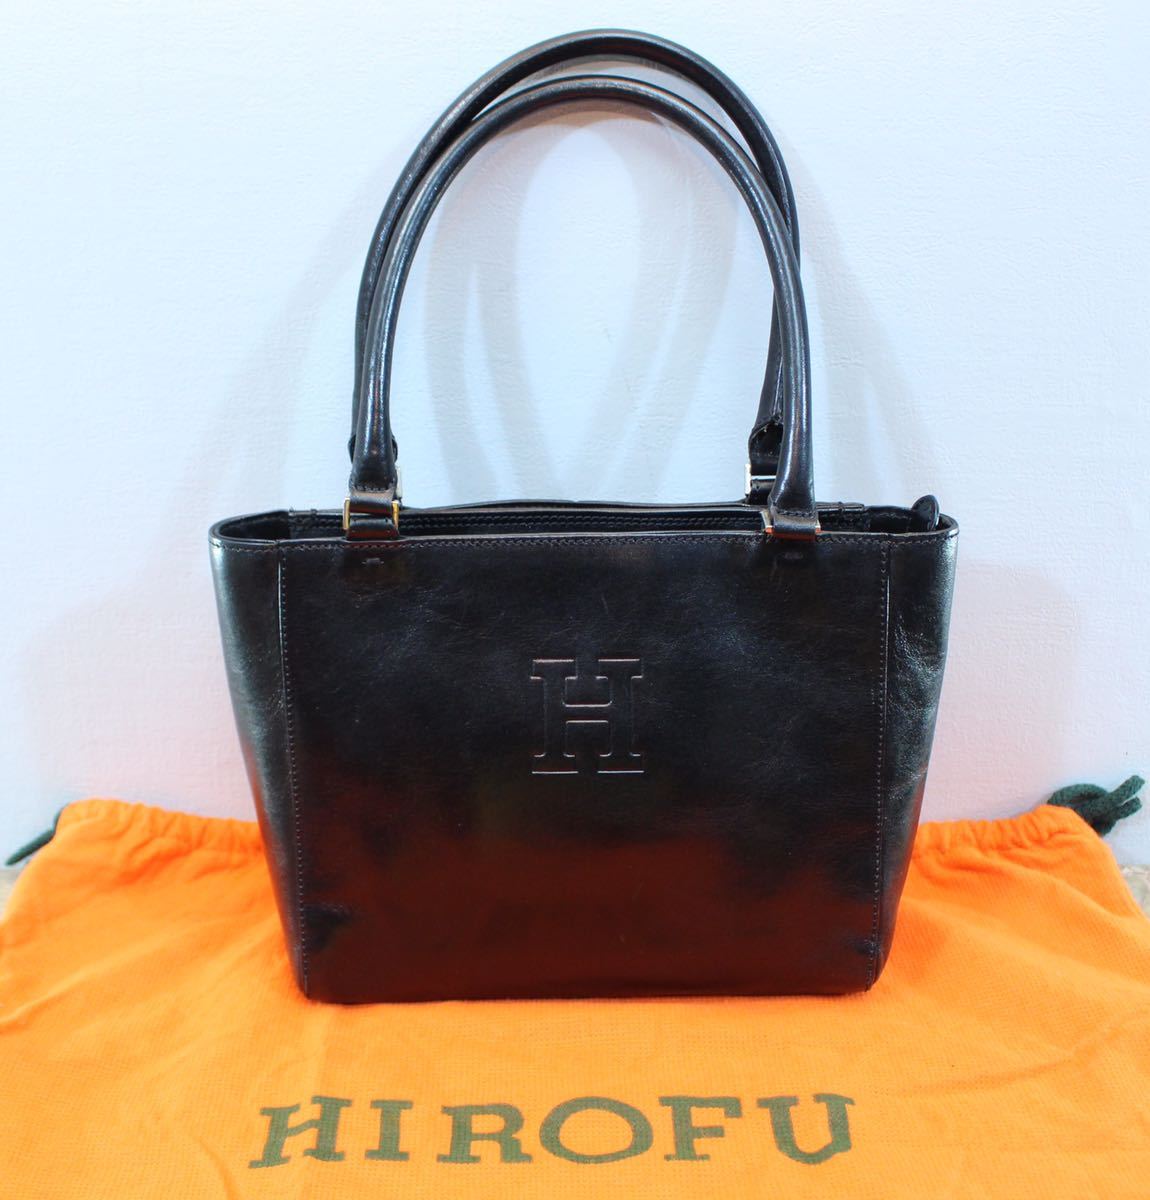 HIROFU H LOGO EMBOSSED LEATHER HAND BAG MADE IN ITALY/ヒロフロゴ型押しレザーハンドバッグ